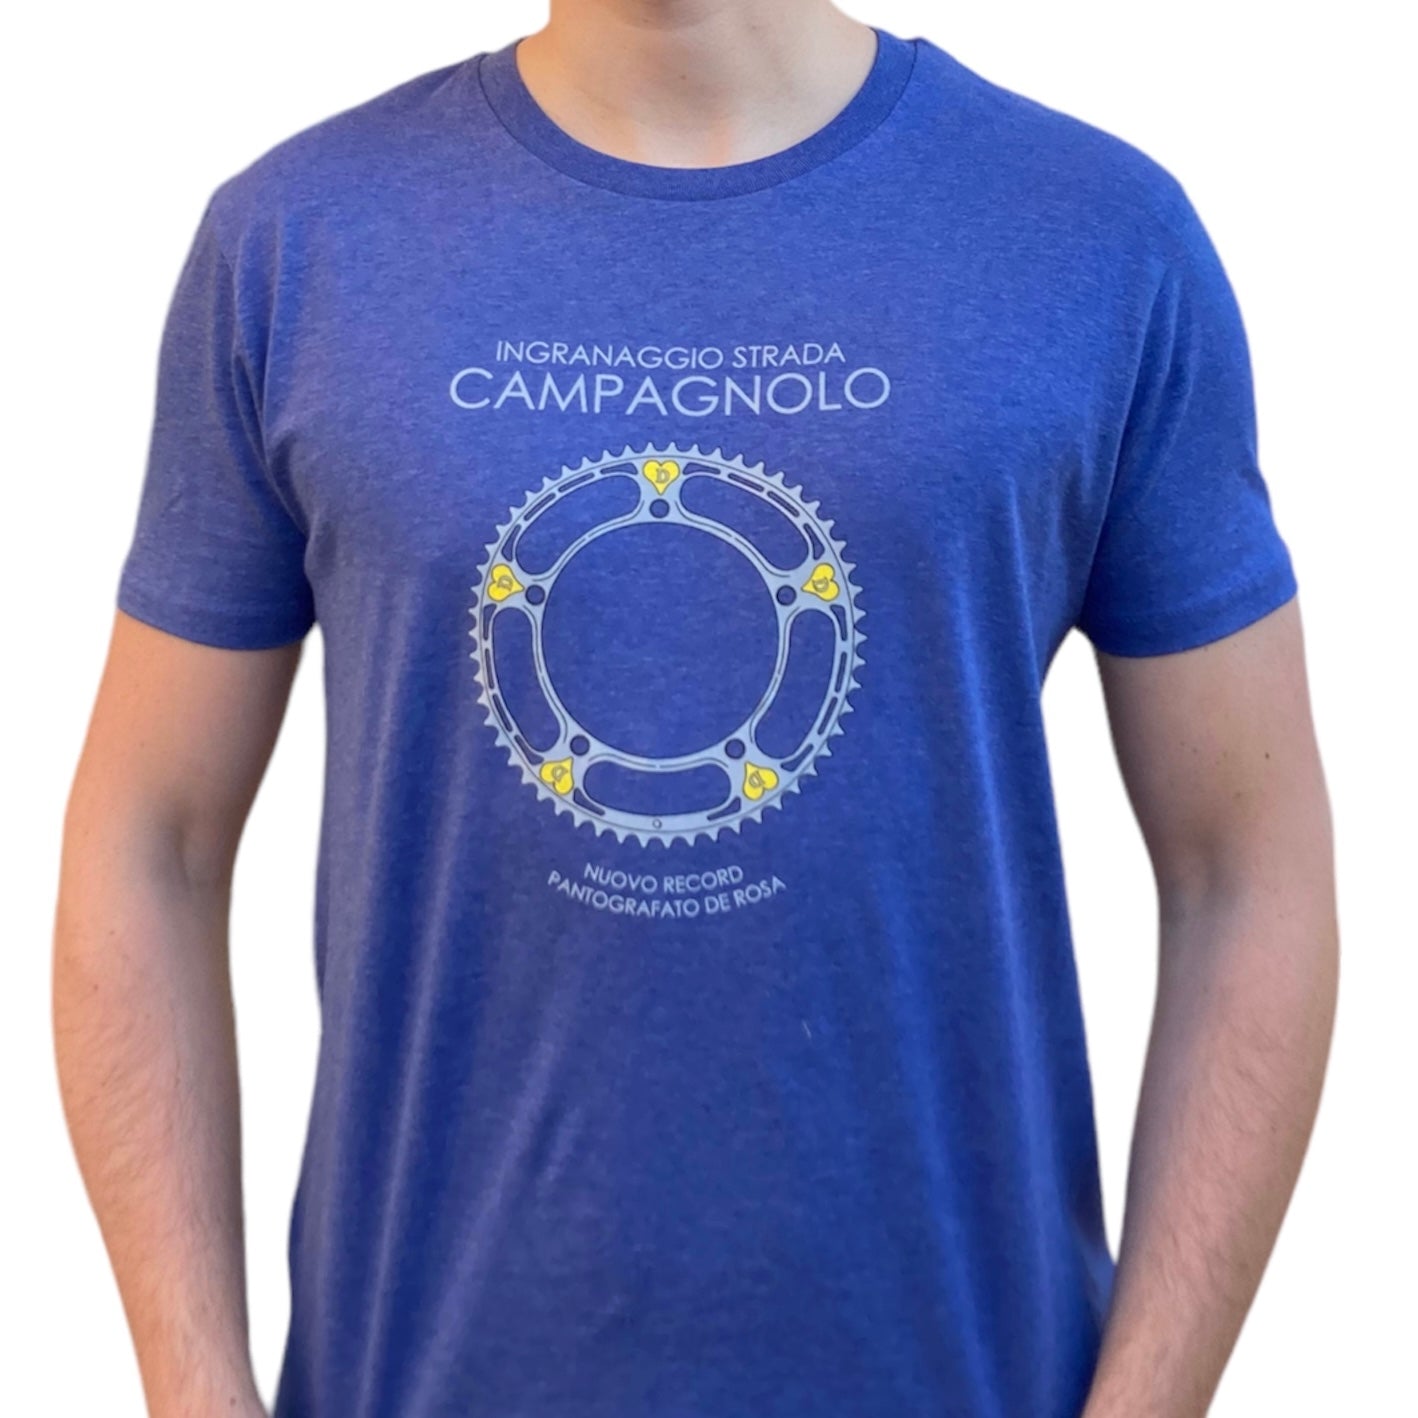 Campy by De Rosa t-shirt